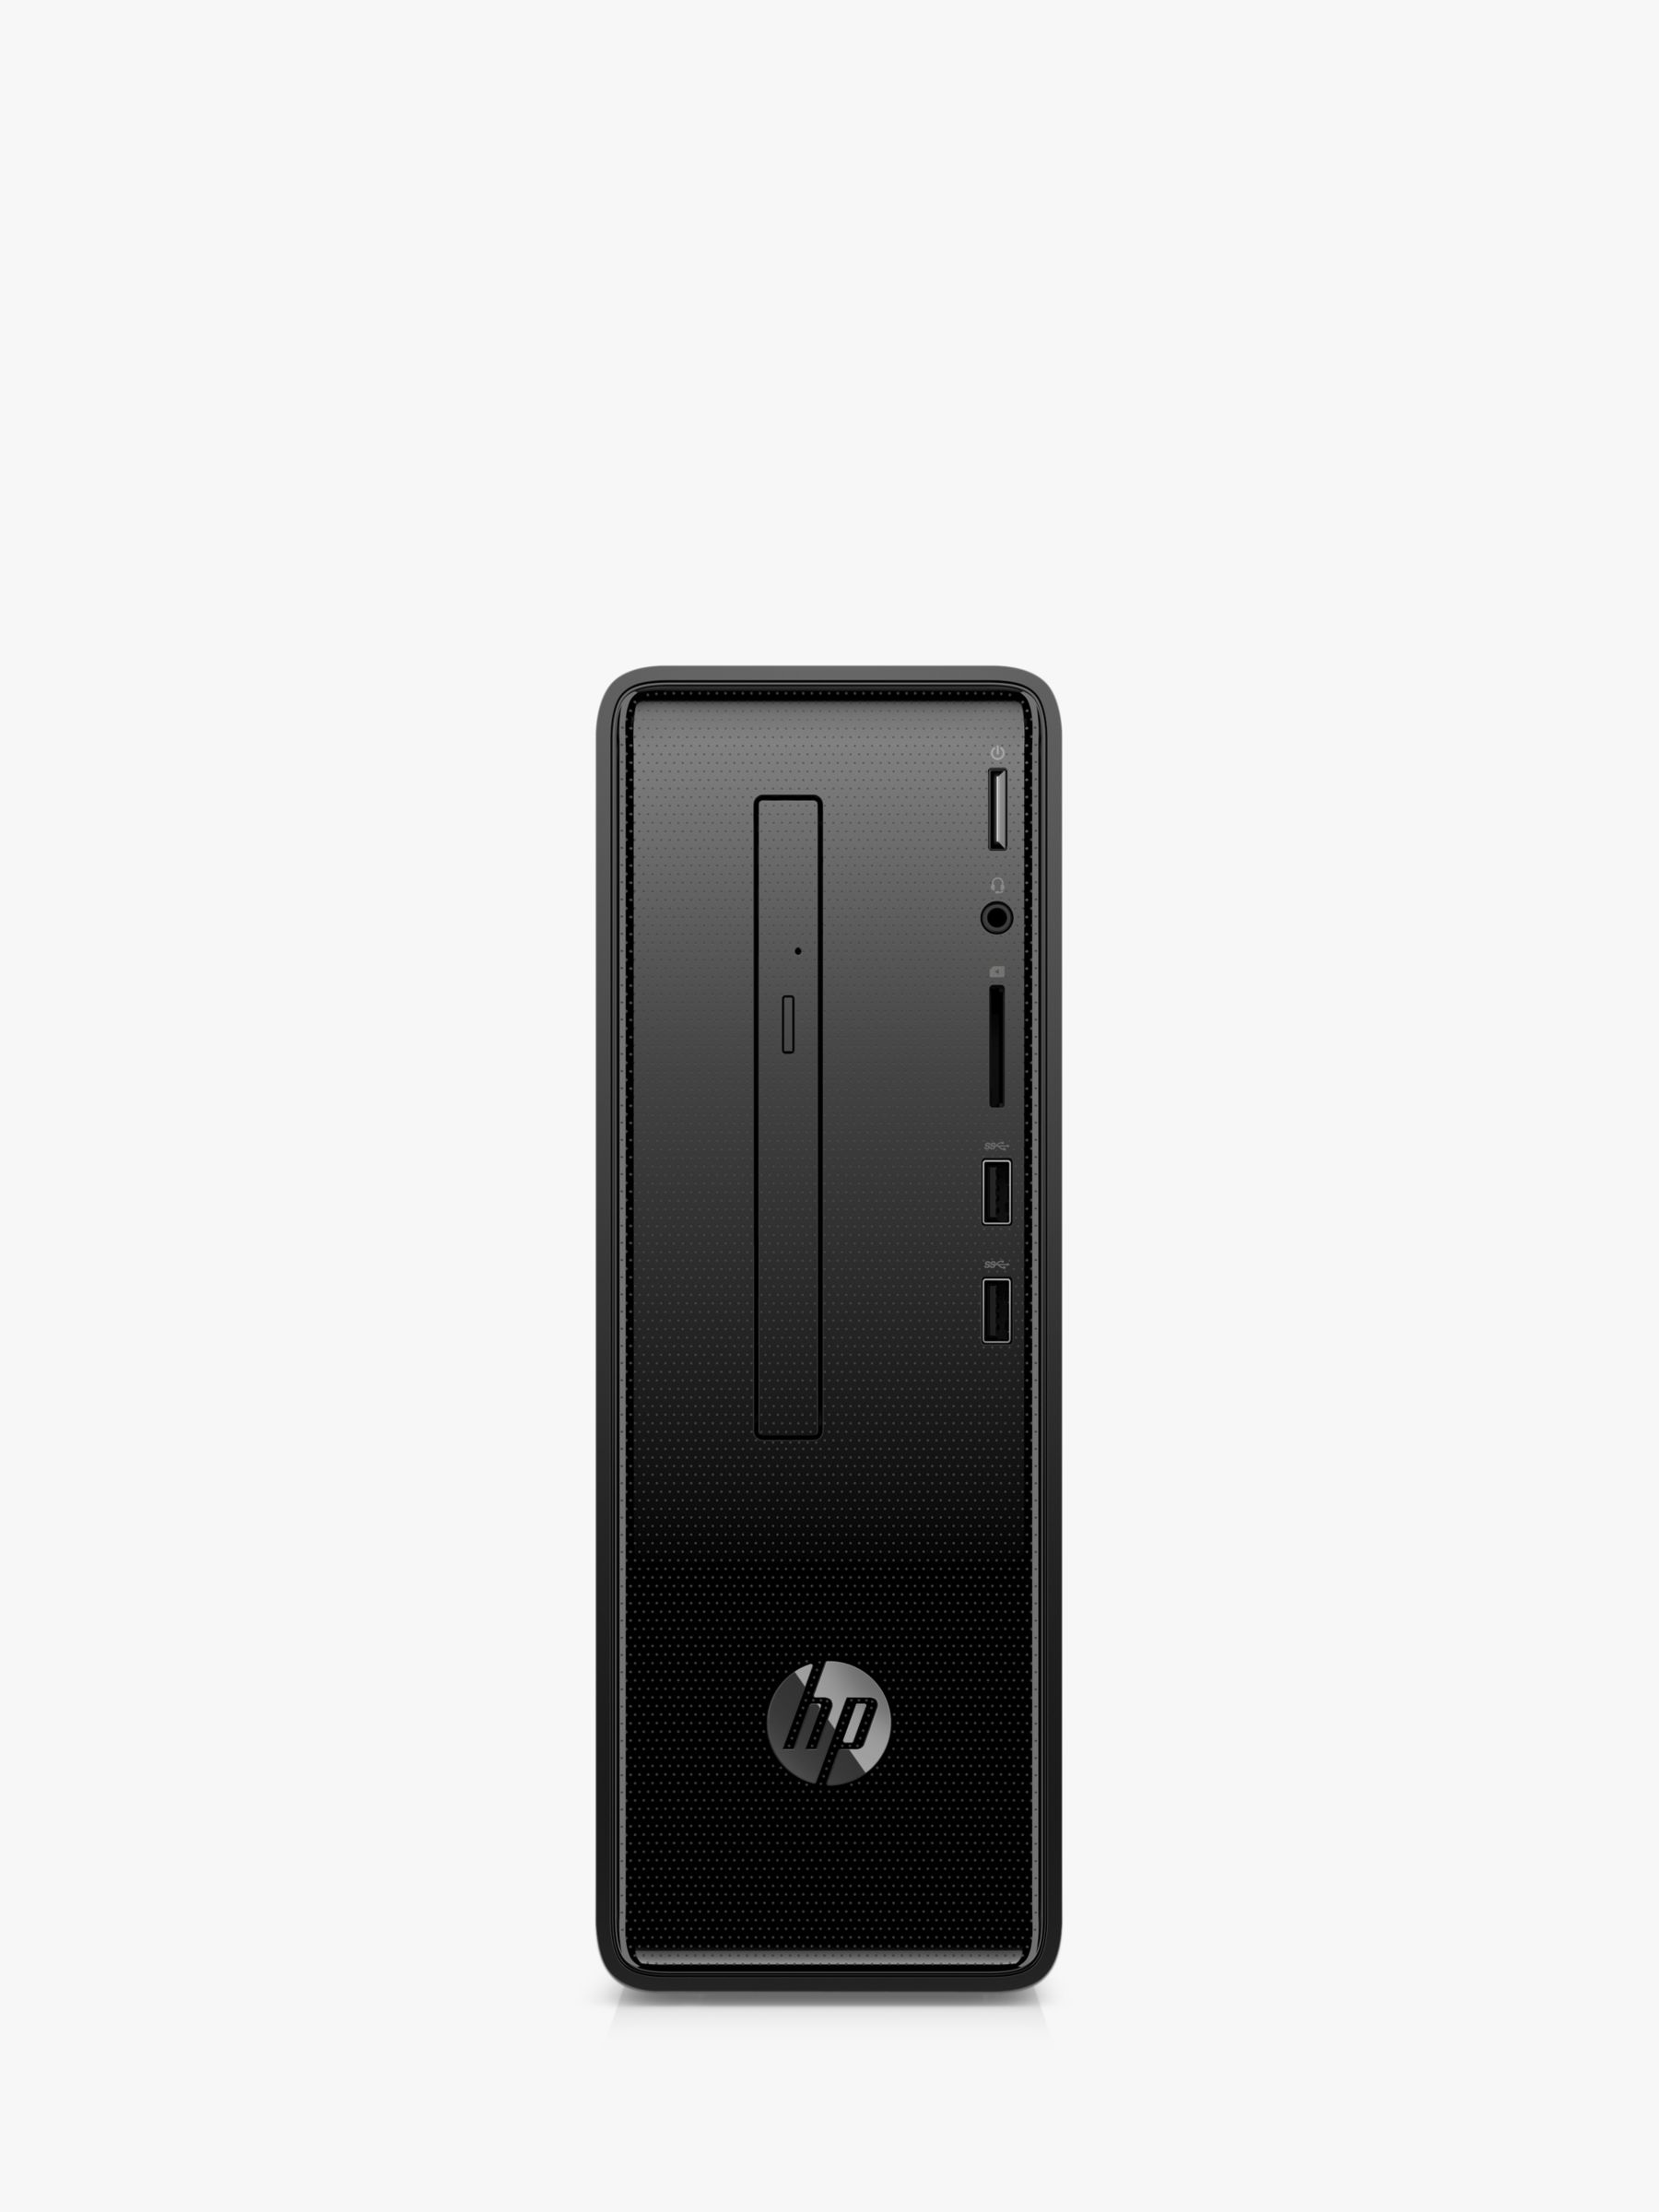 HP Slimline 290-a0009na Desktop PC, AMD A9 Processor, 8GB RAM, 1TB HDD, Dark Black